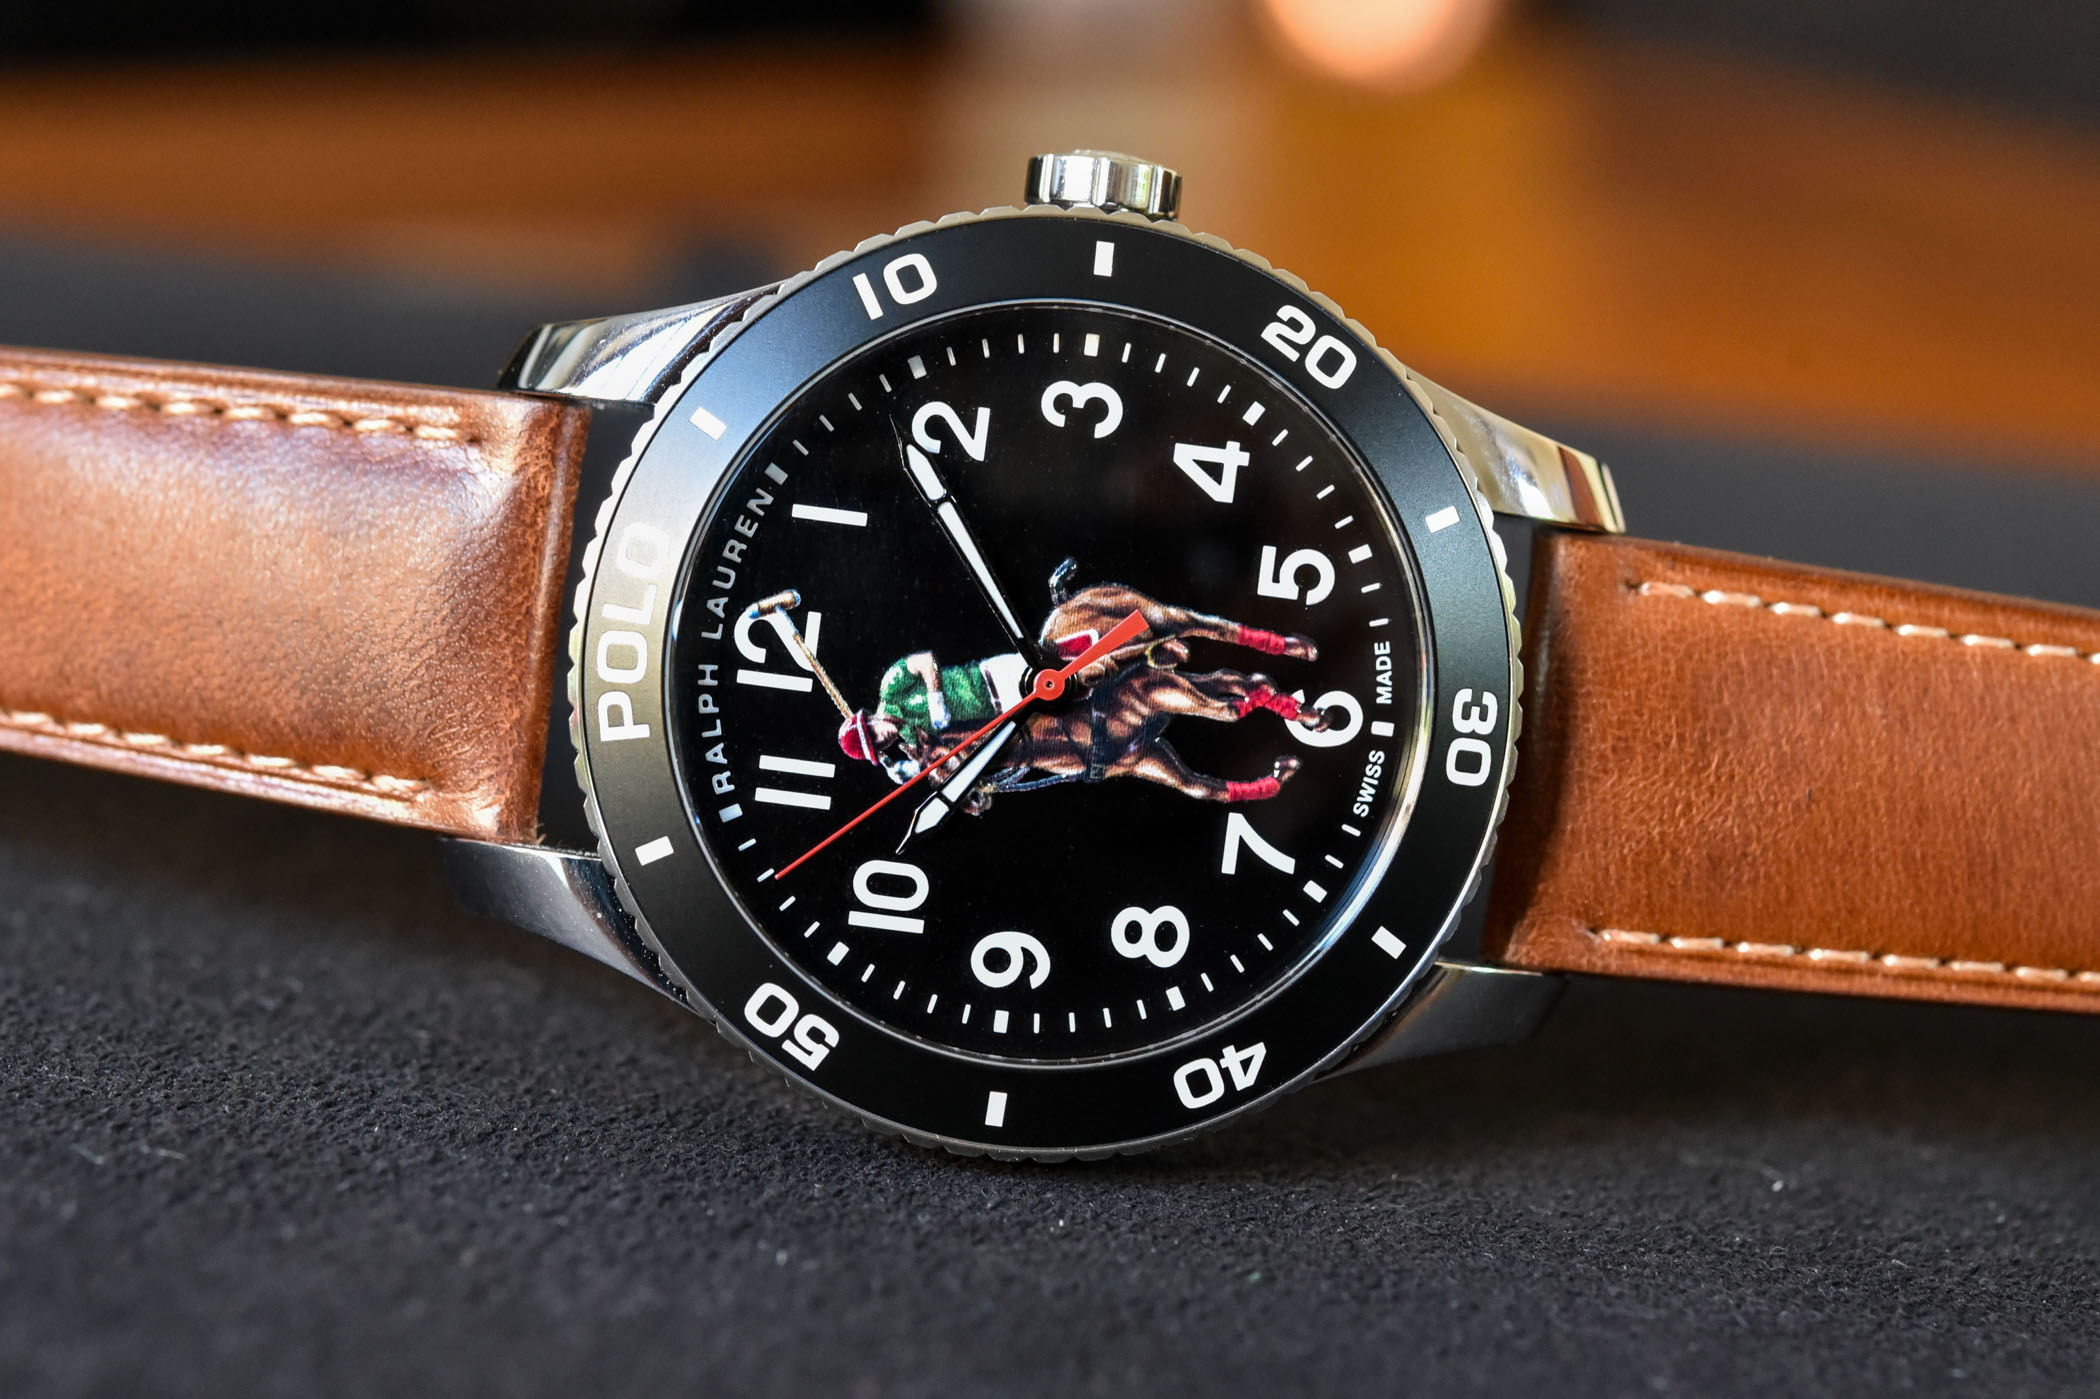 2020 Ralph Lauren Polo Watch Collection